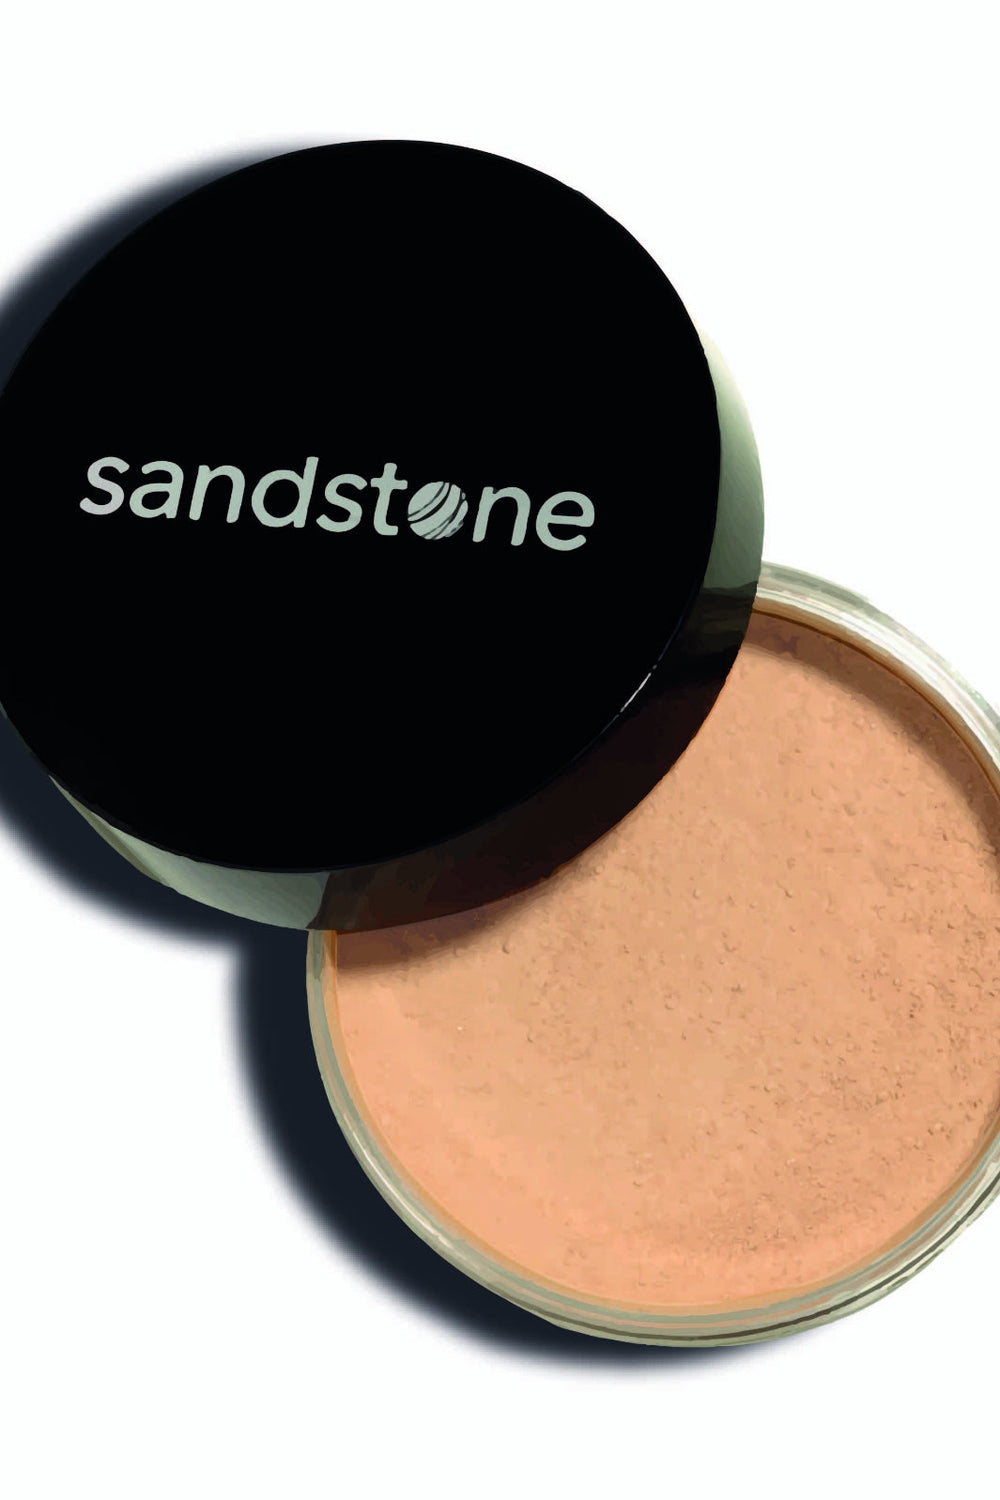 Sandstone - Velvet Skin Mineral Powder - 03 Sand Makeup 